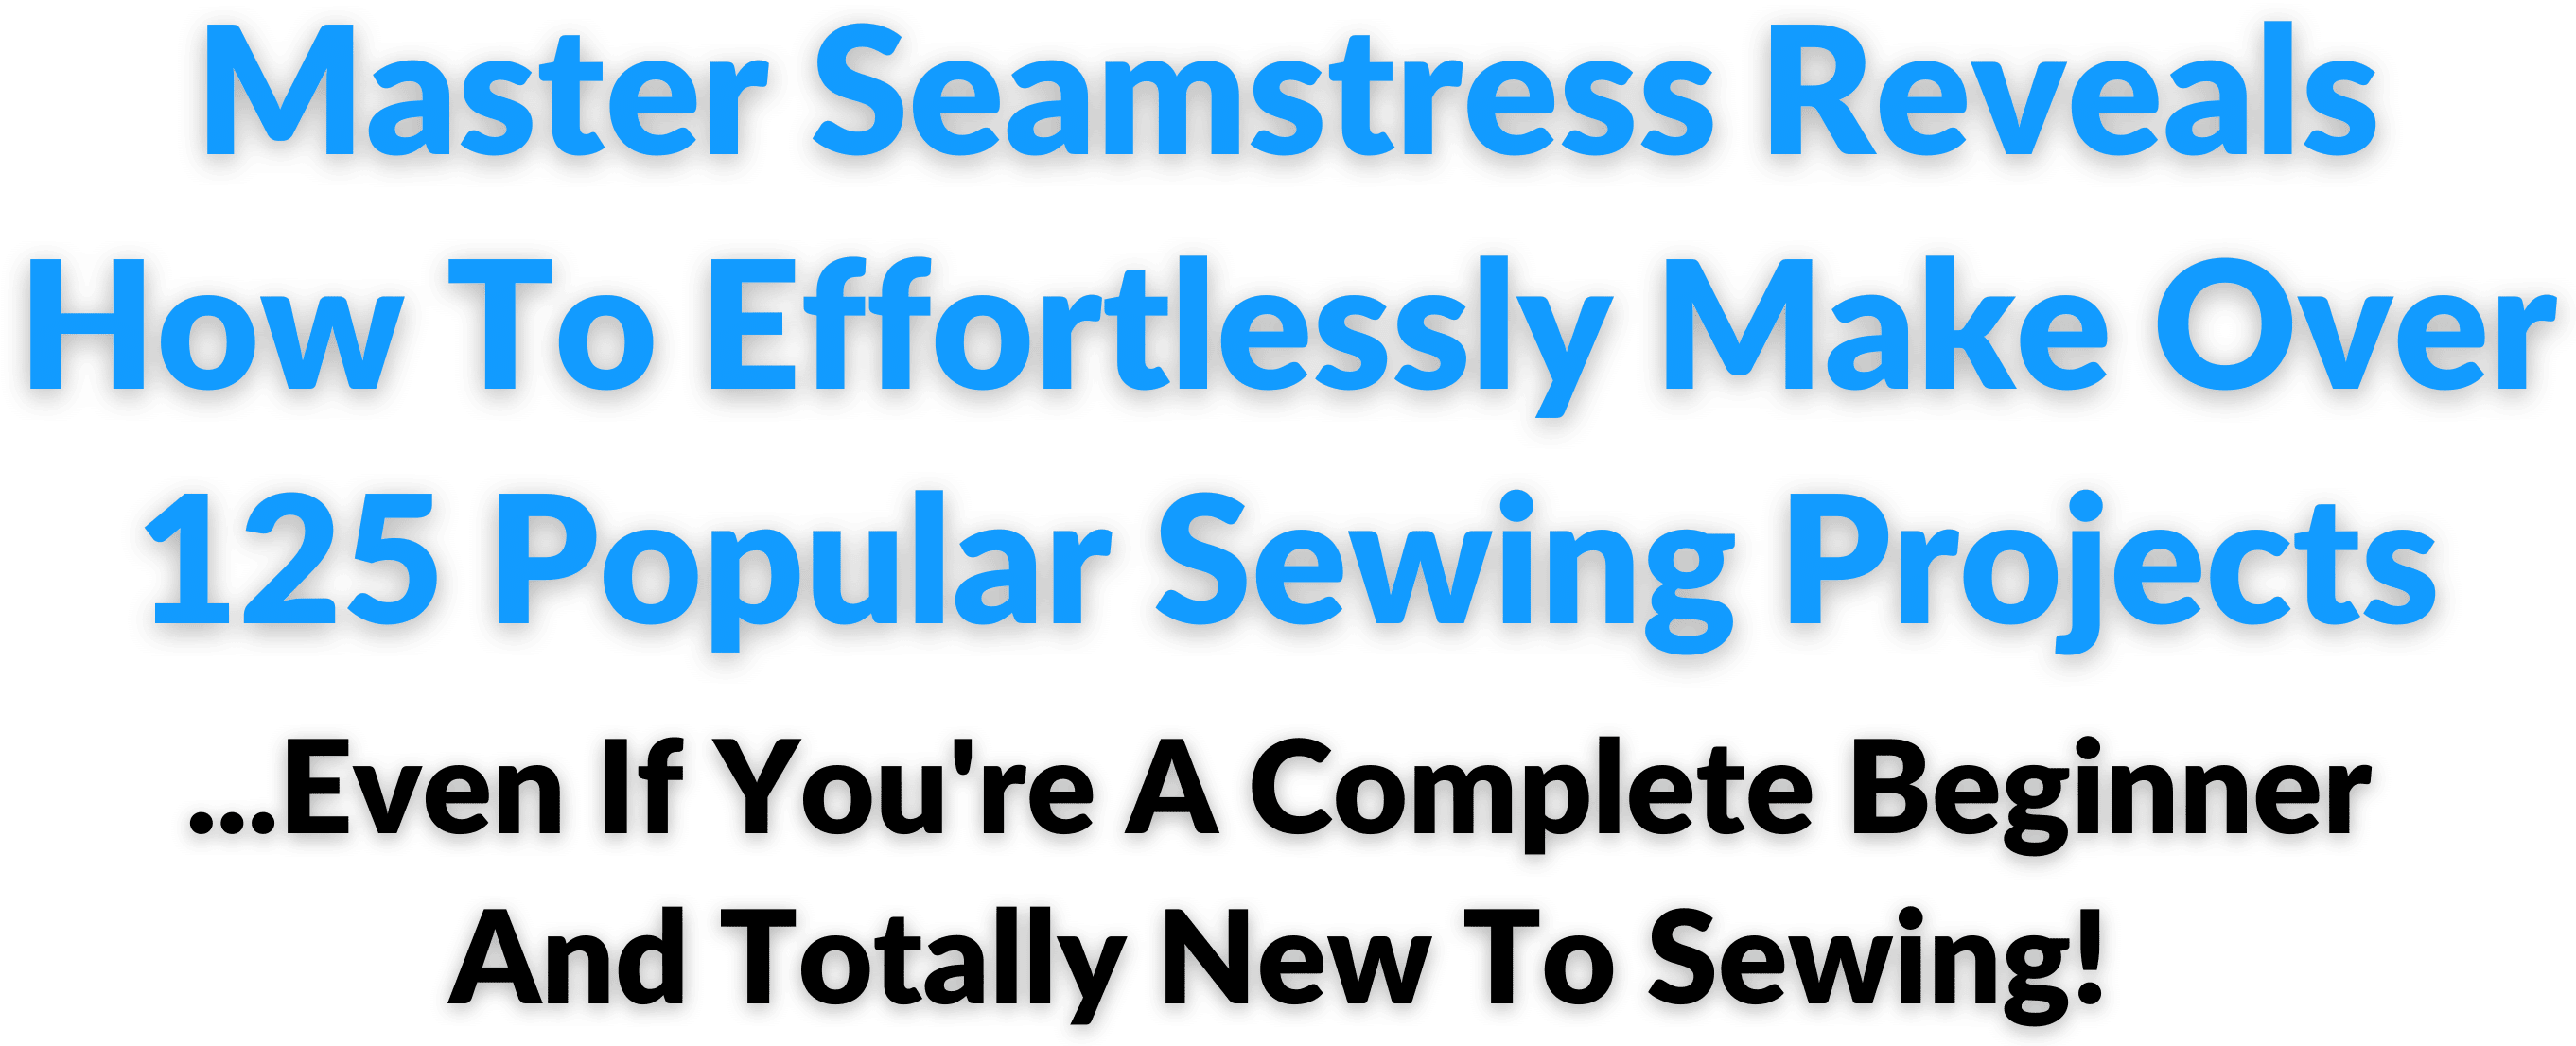 Sewing Pattern Secrets